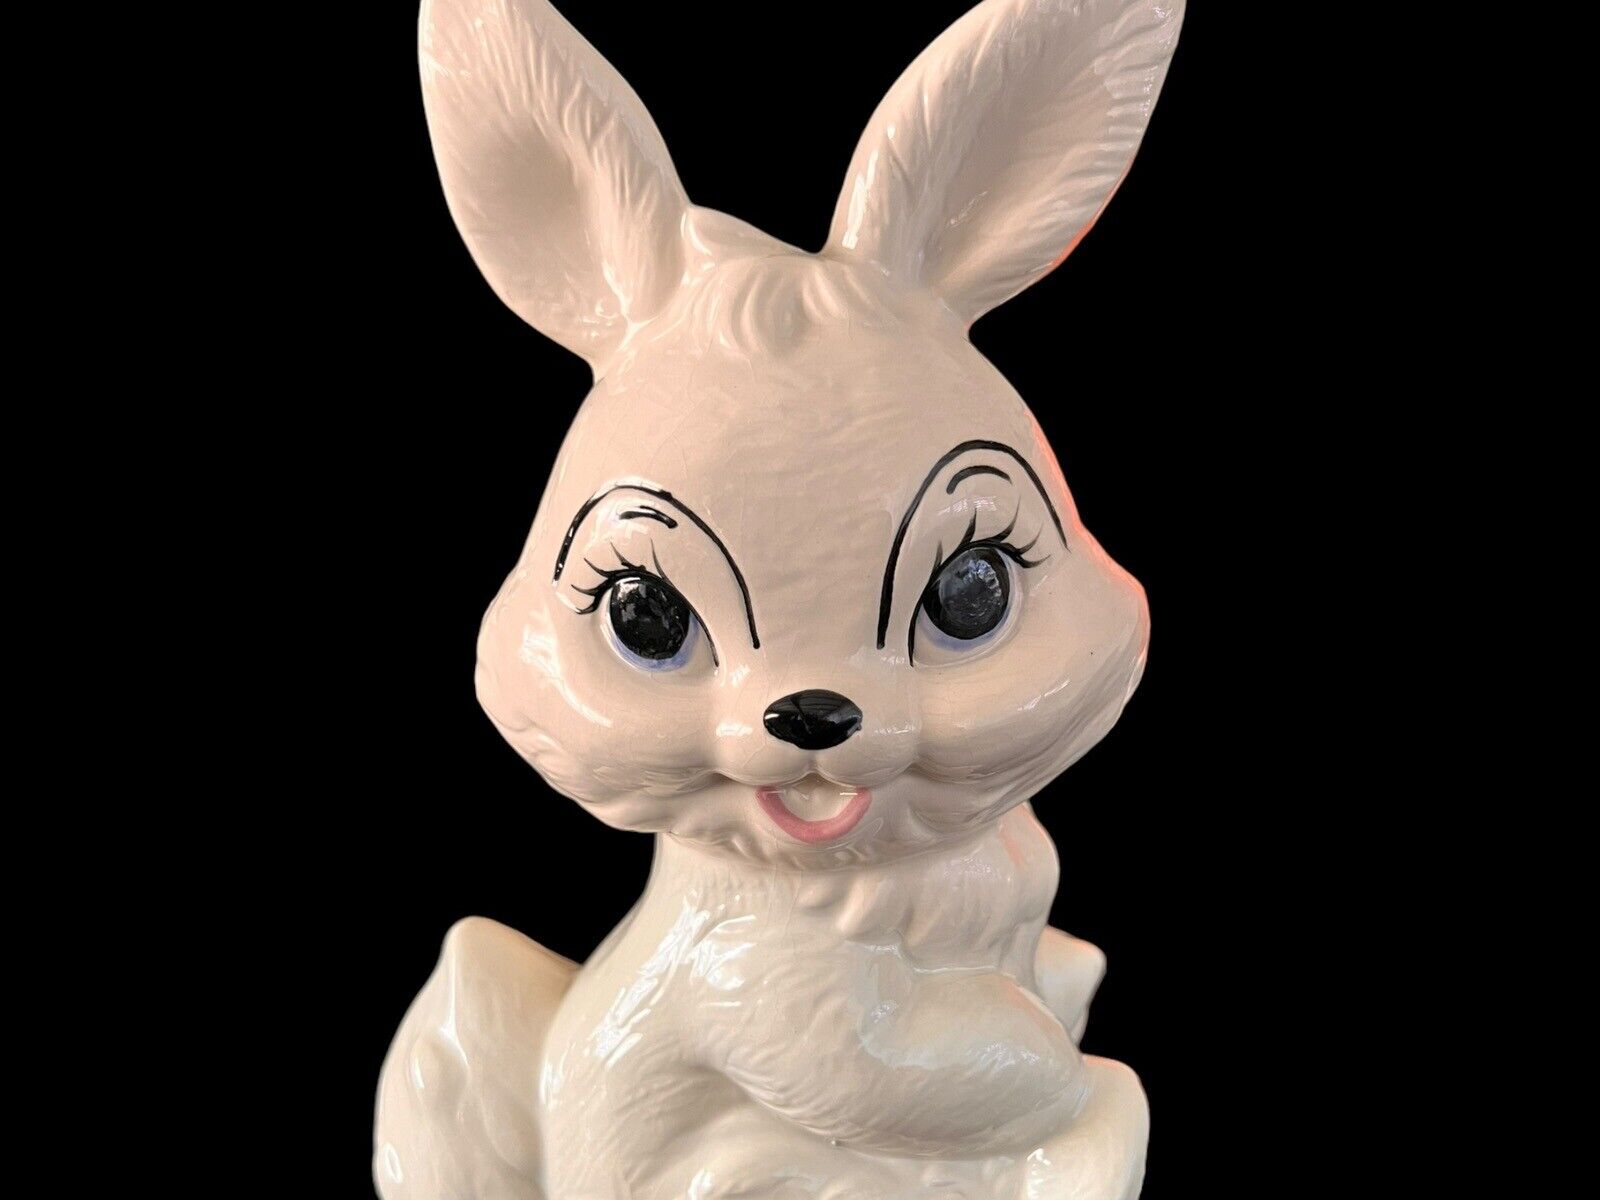 Vintage 8” Ceramic White Bunny Sculpture Home Decor Easter Figurine